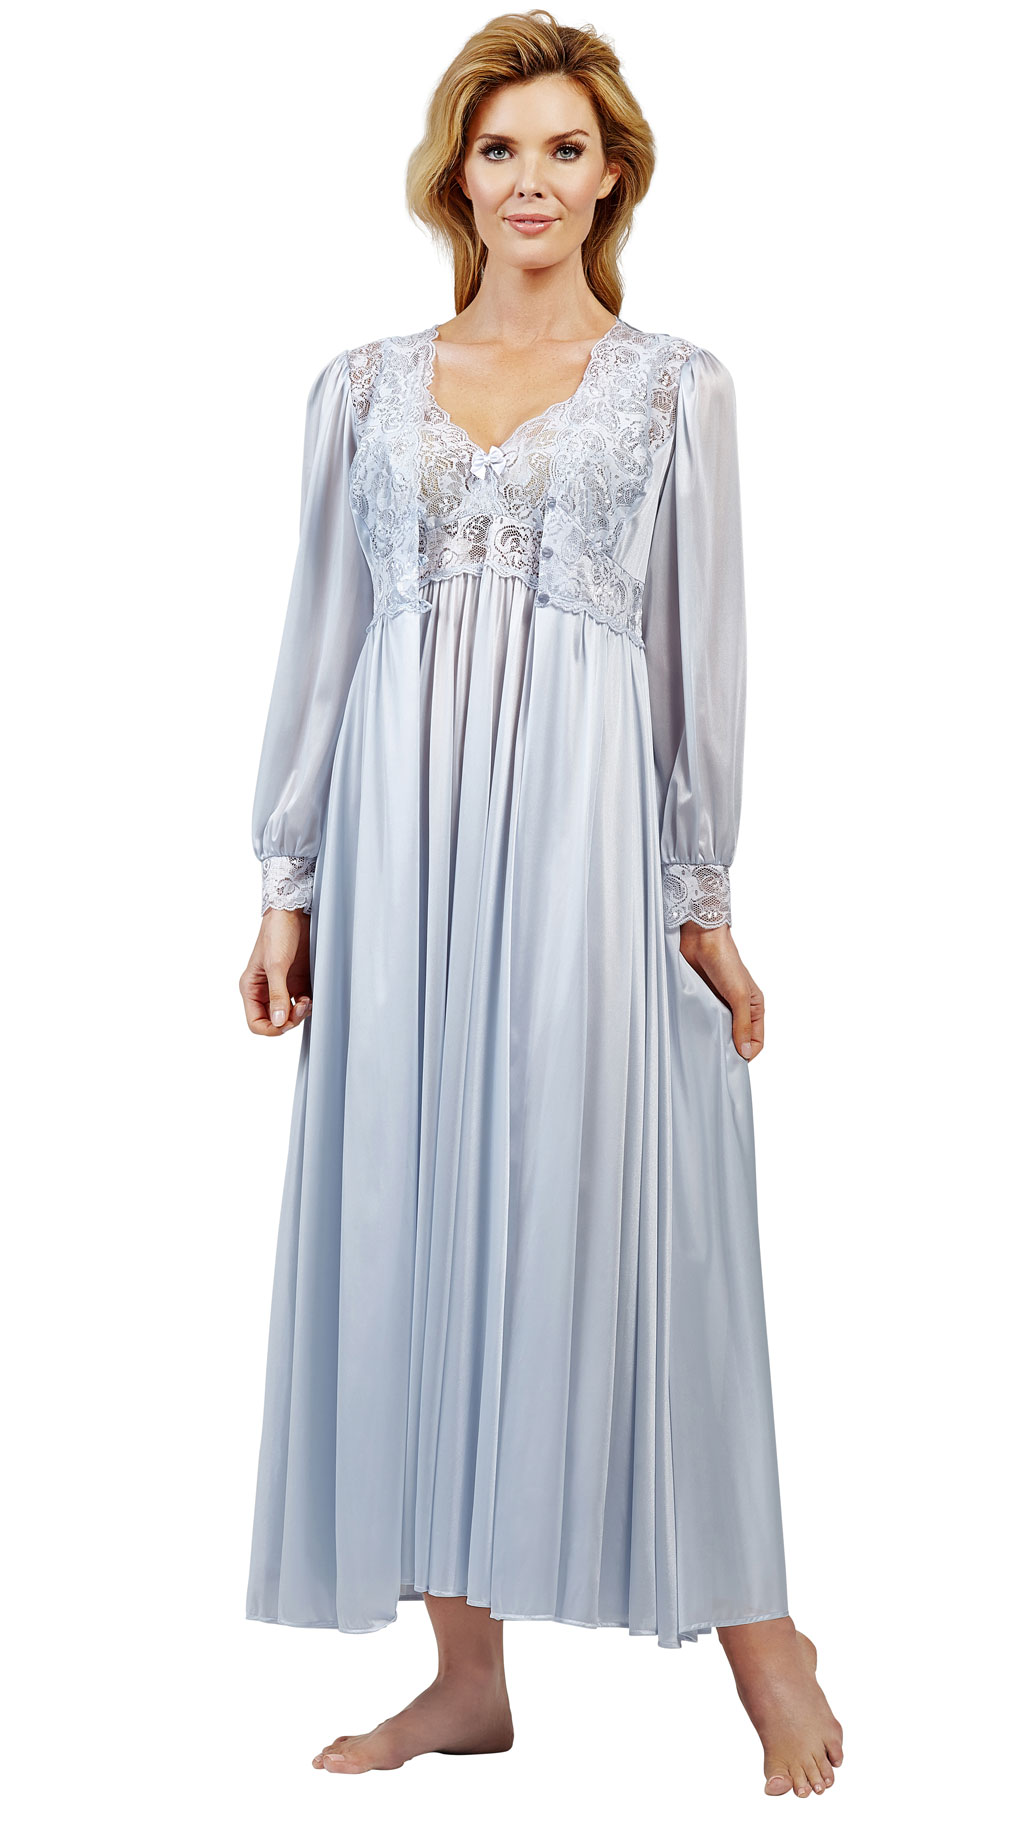 Organic Cotton Nightgown, Women Lingerie, Bridal Lingerie, Slip Dress,  White Lingerie, Wedding Lingerie, Wife Gift, Made to Order -  Canada